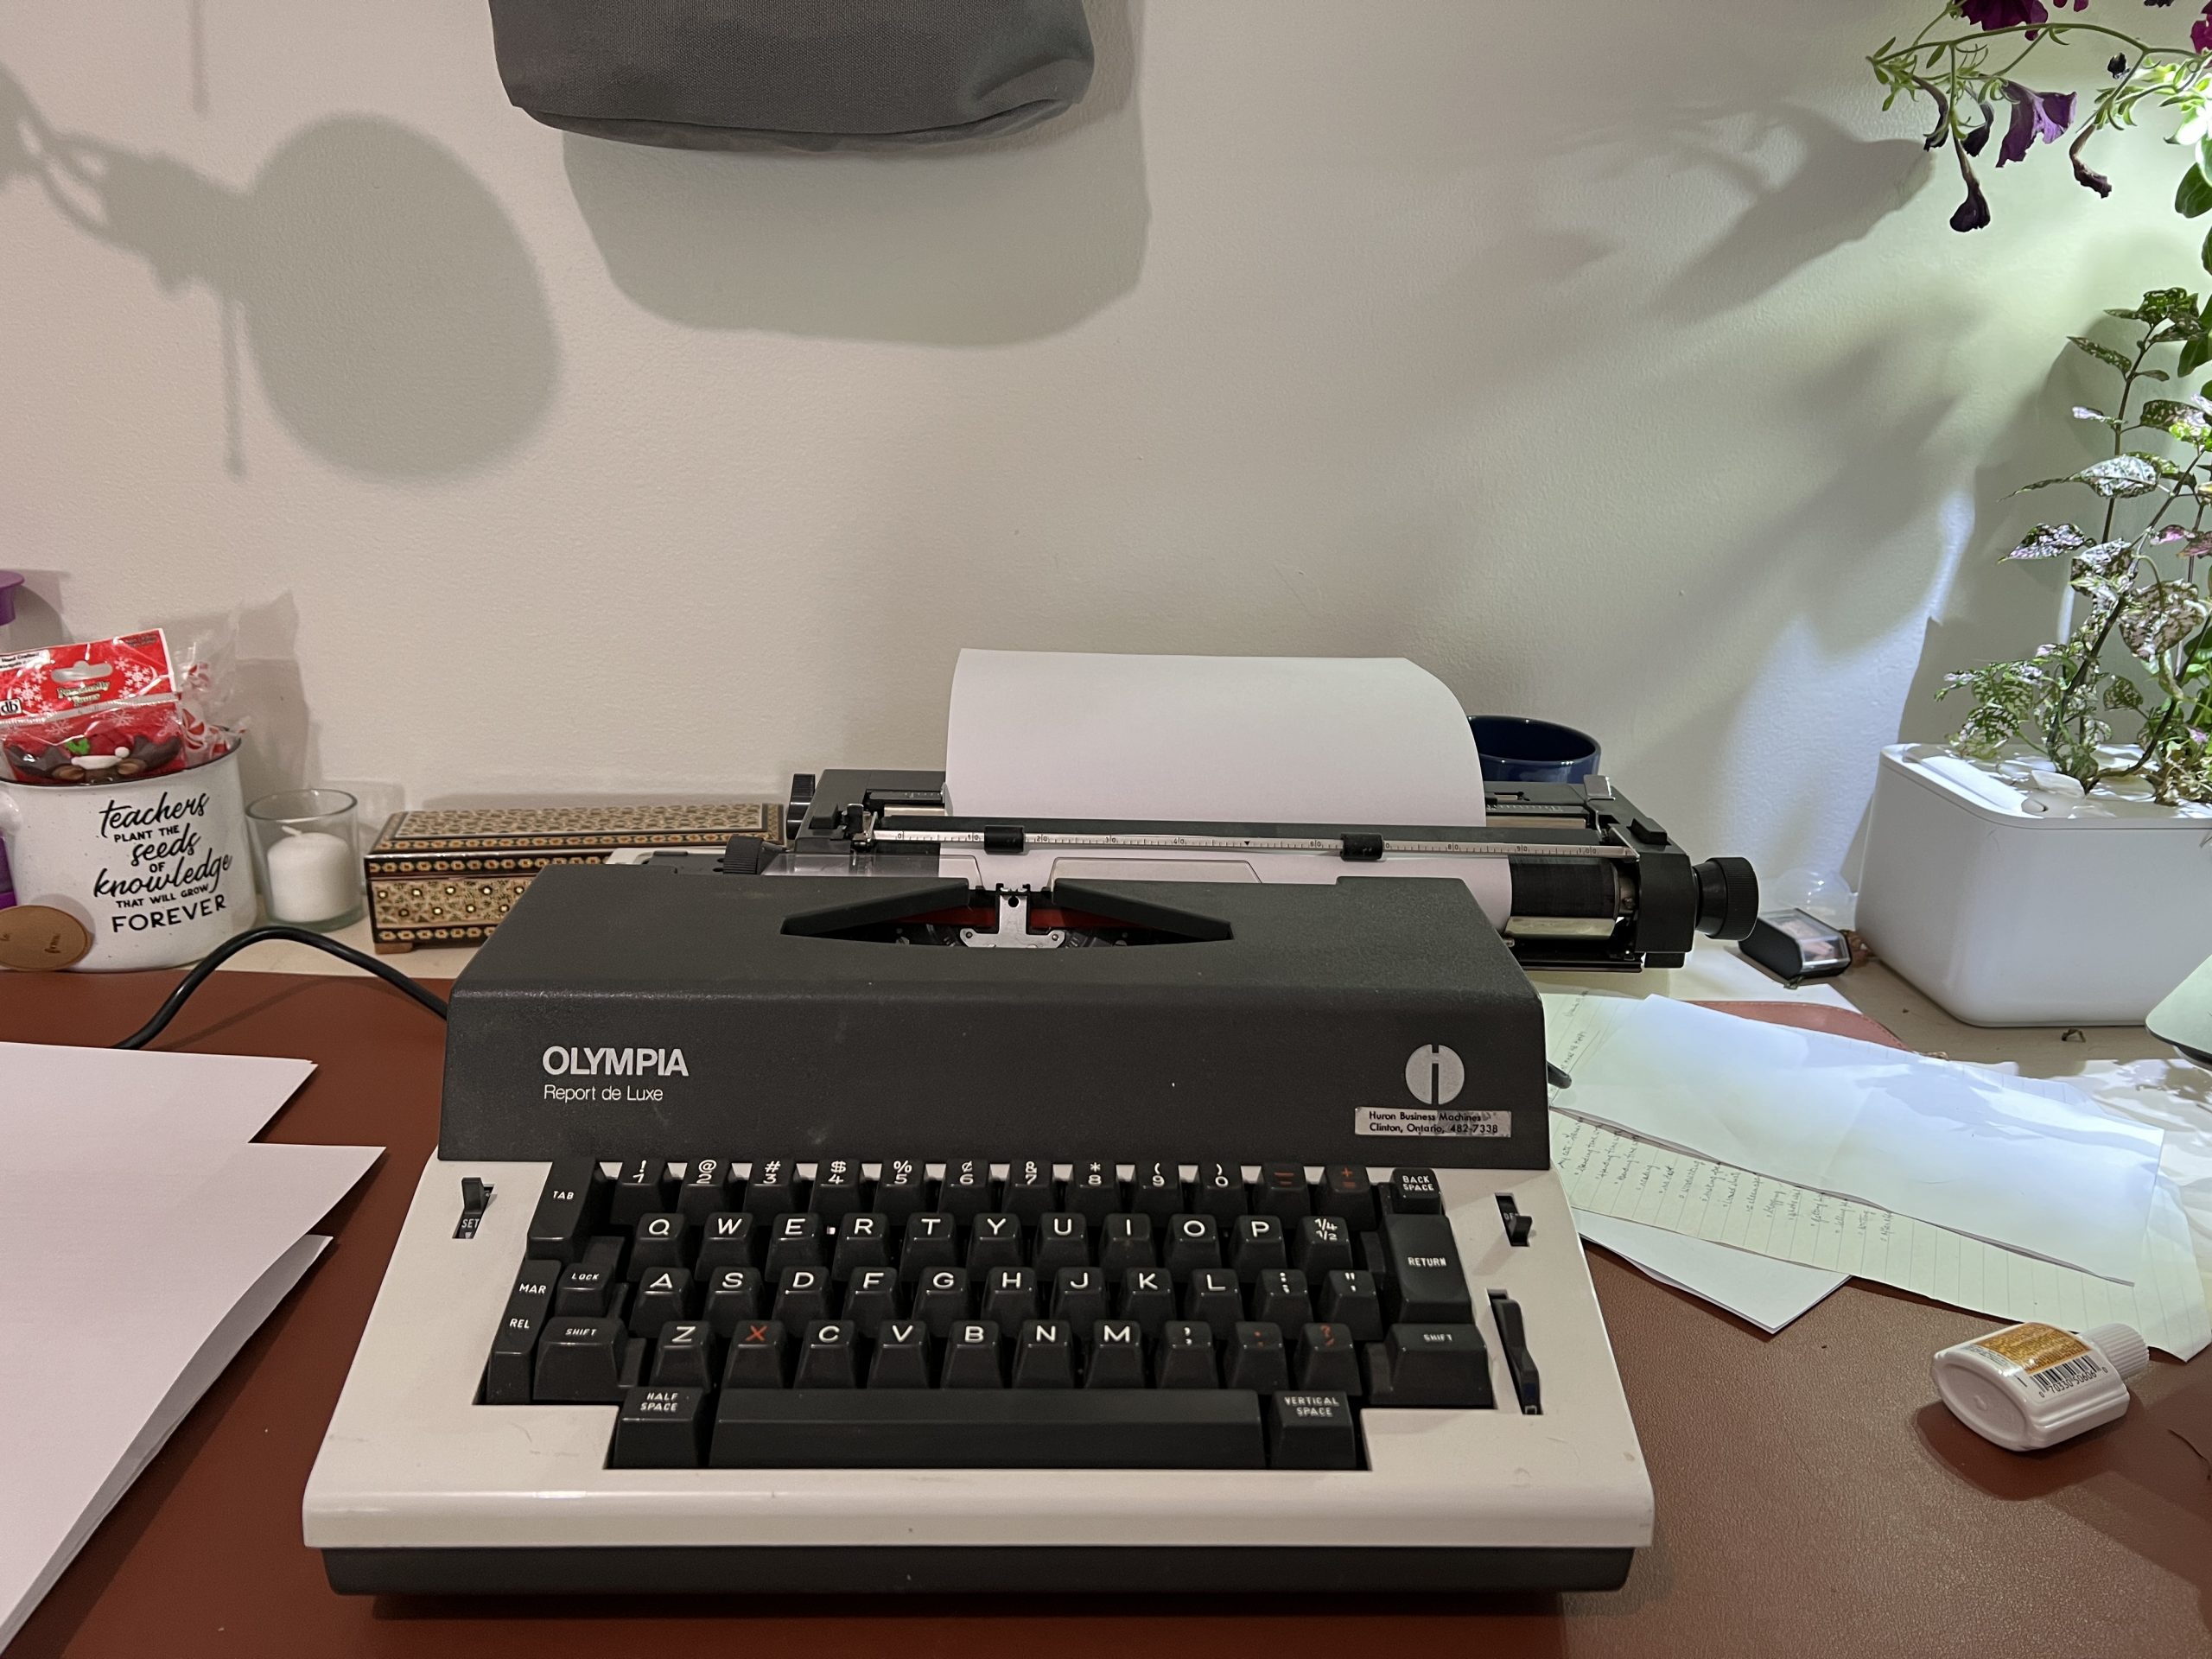 I found a typewriter